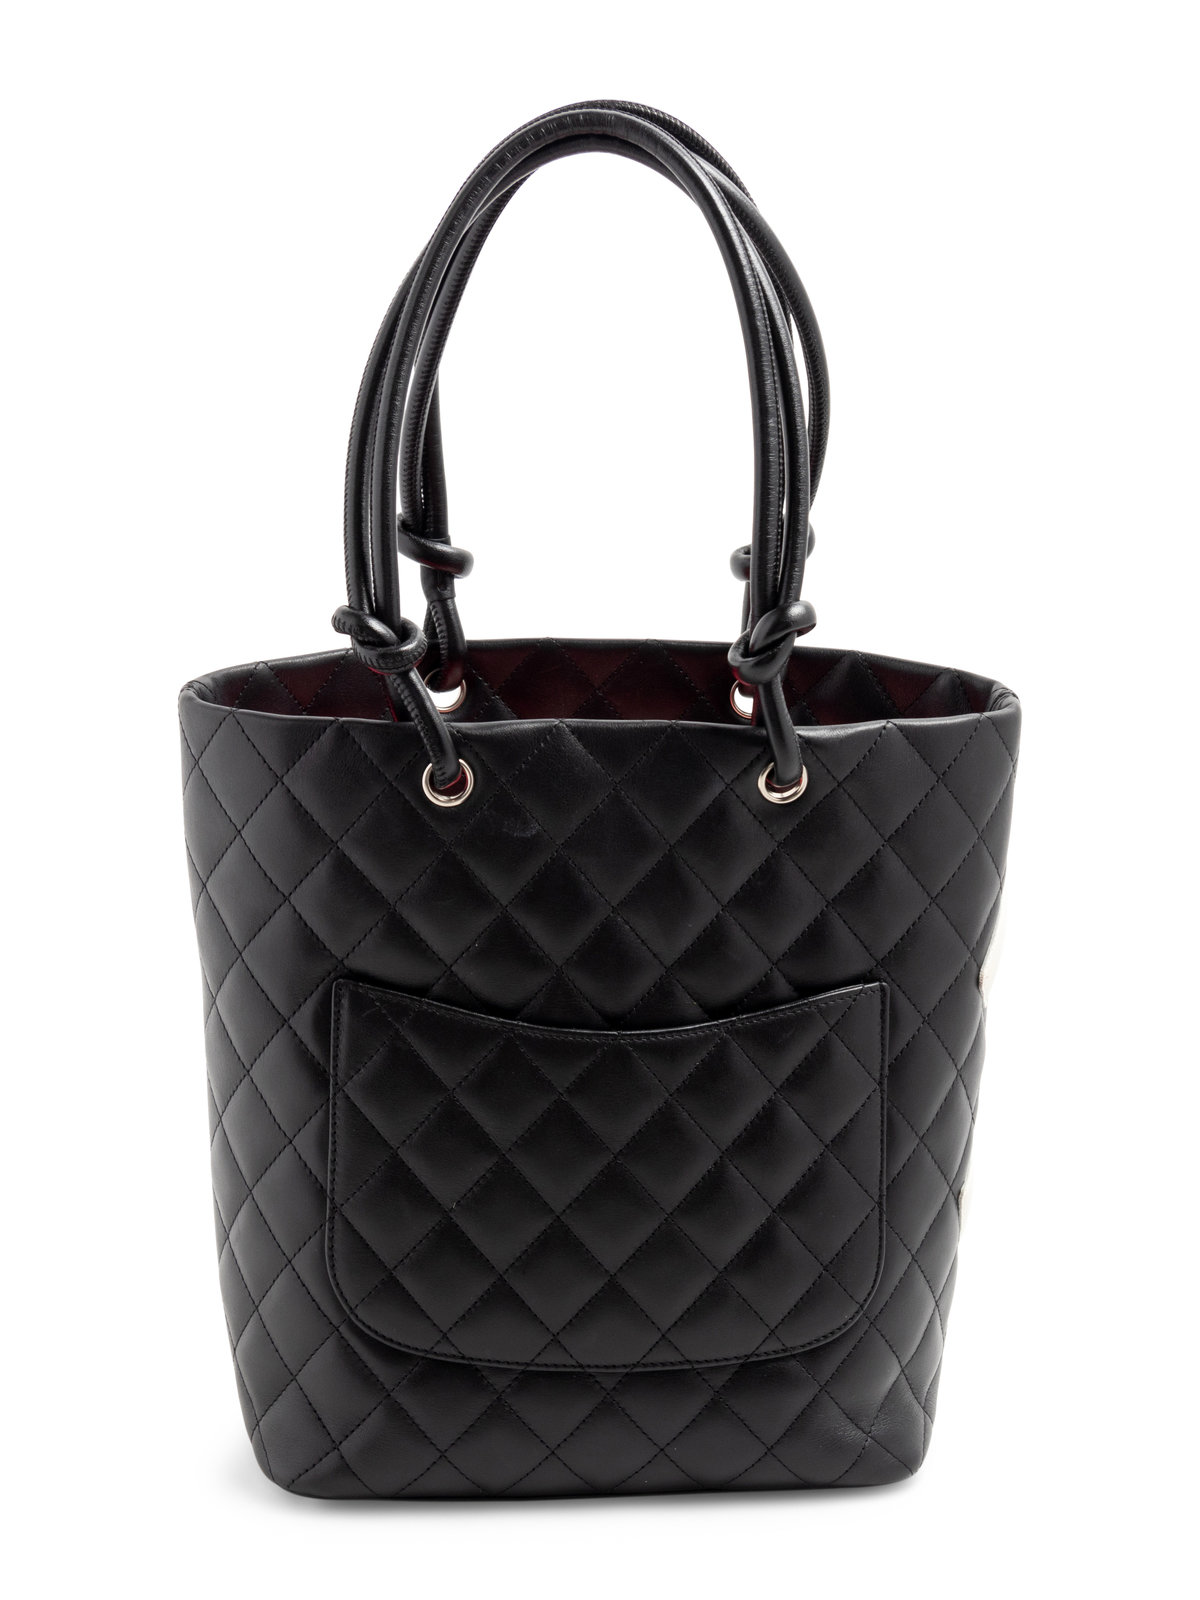 Chanel Cambon Handbag 335544